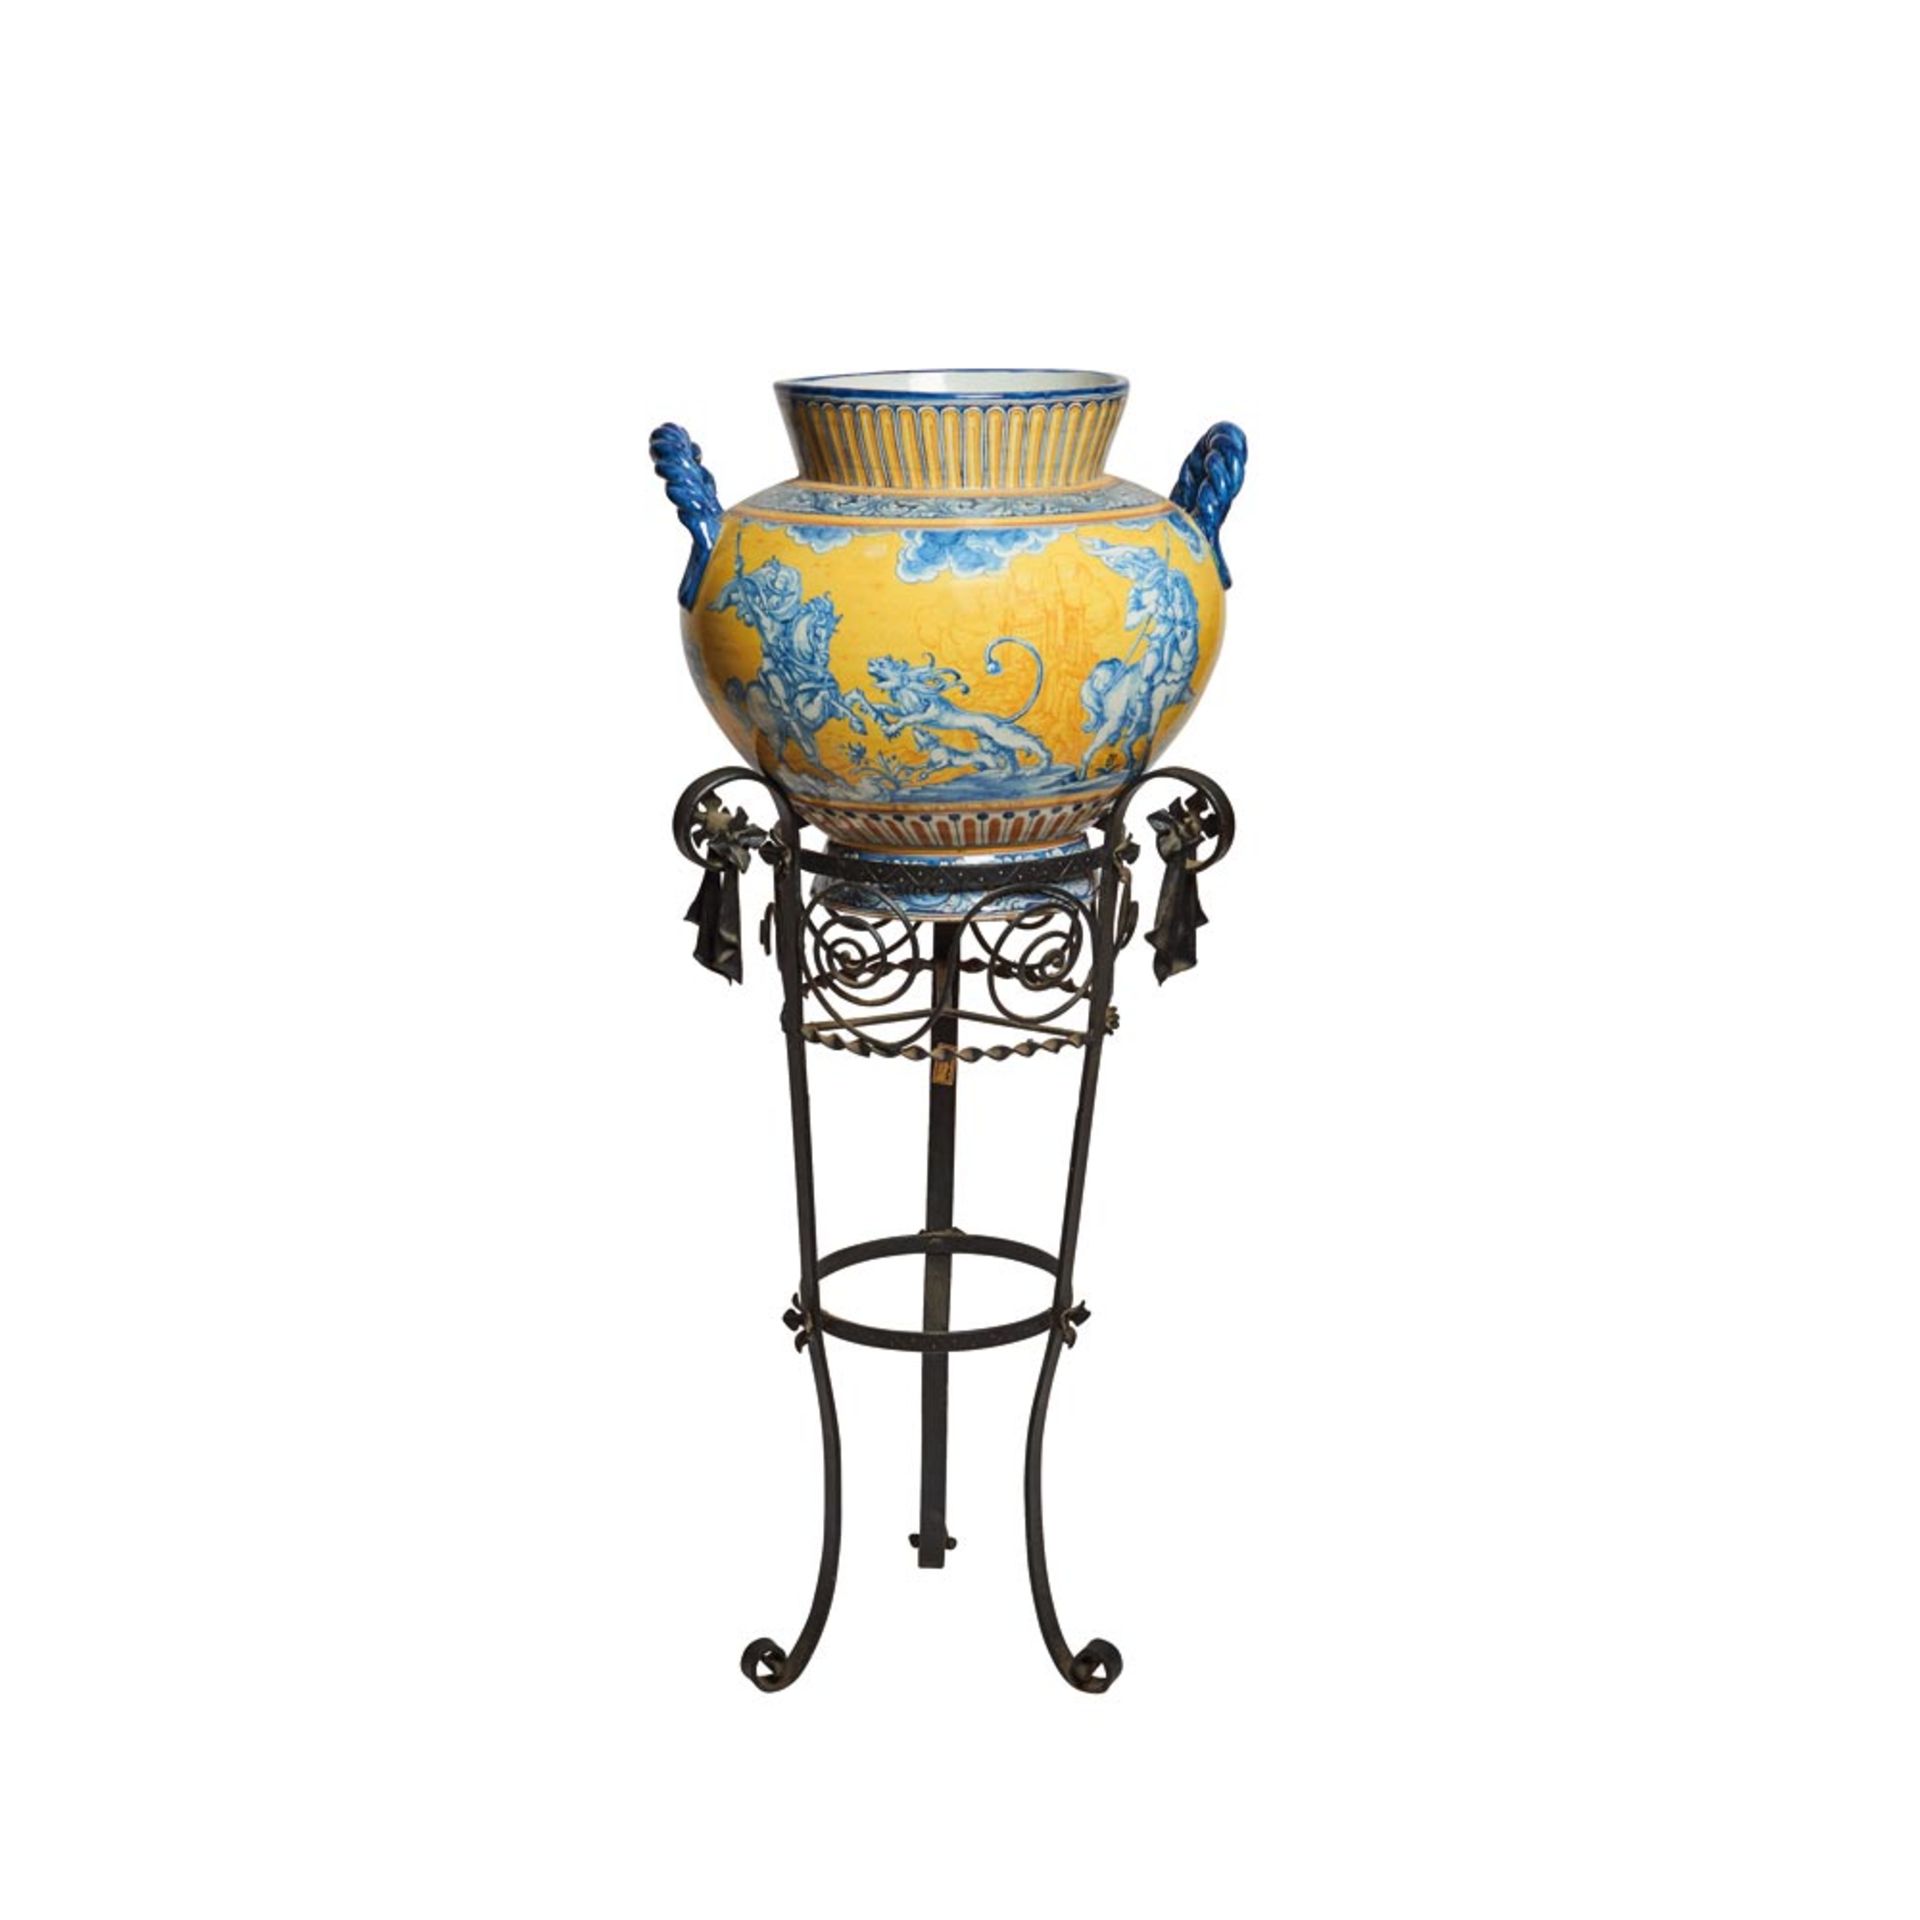 Spanish Talavera glazed ceramic vase, early 20th century